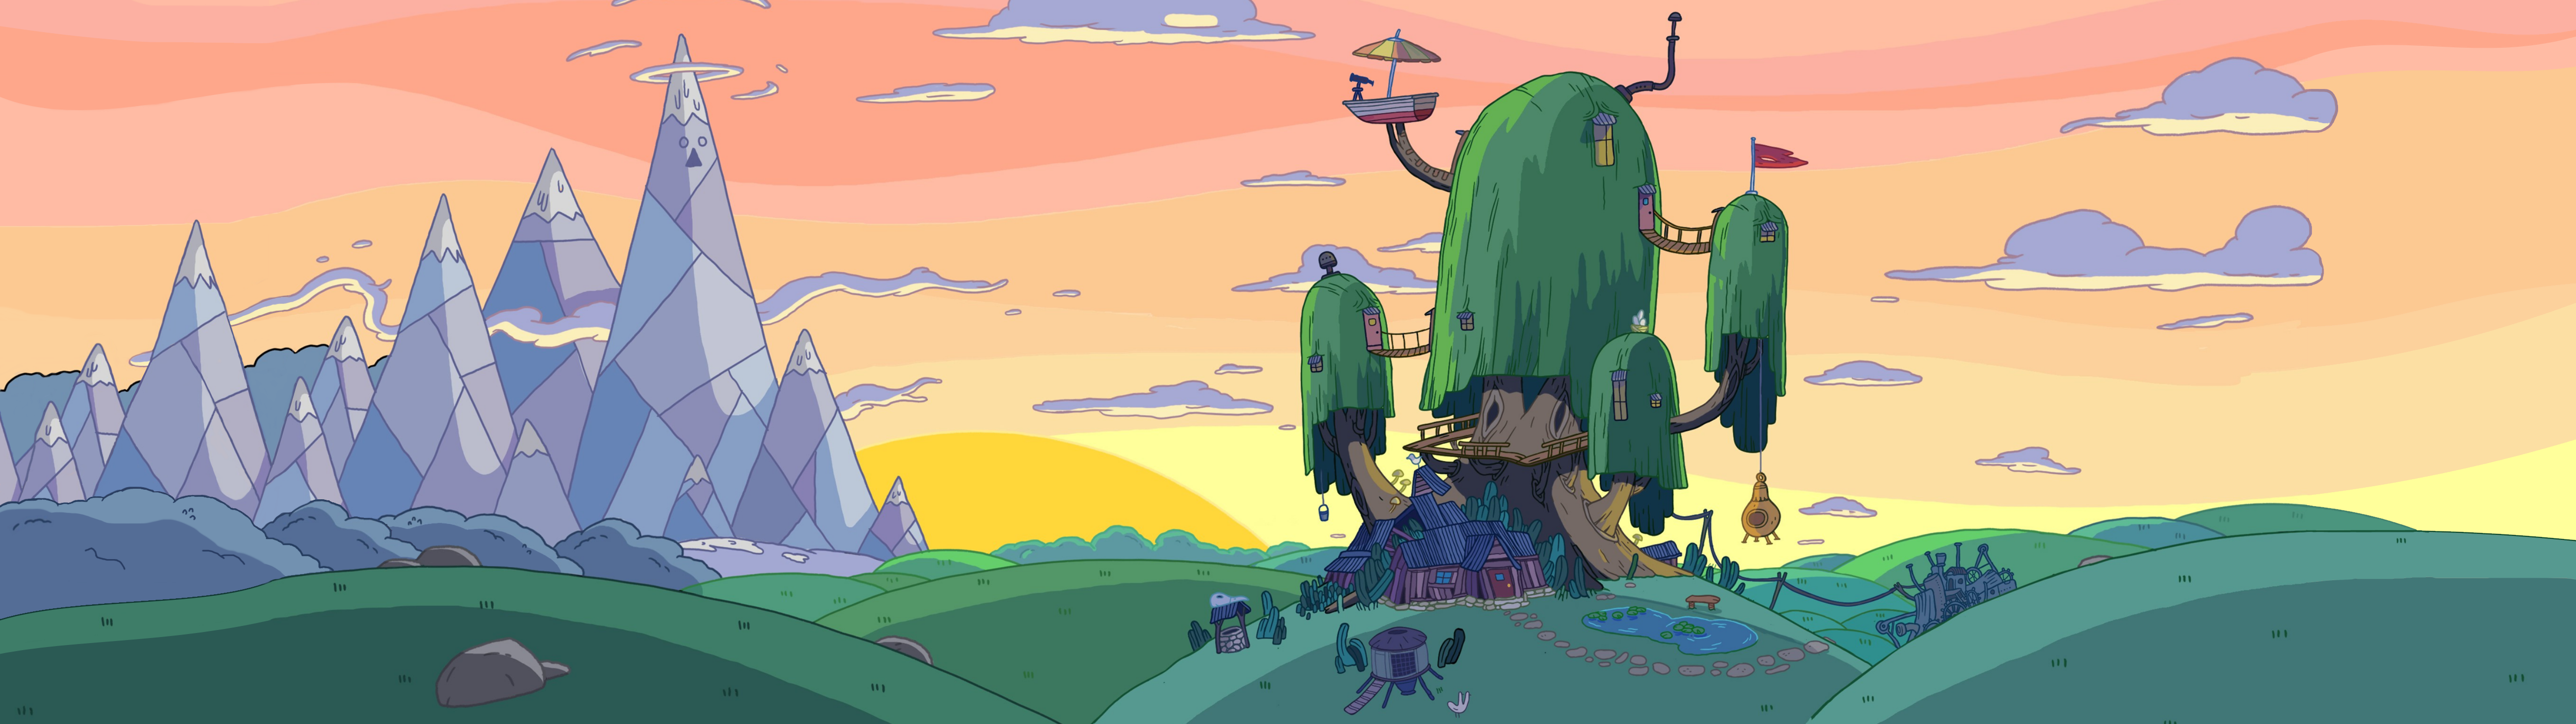 Adventure Time Landscape Ultrawide Cartoon 5120x1440